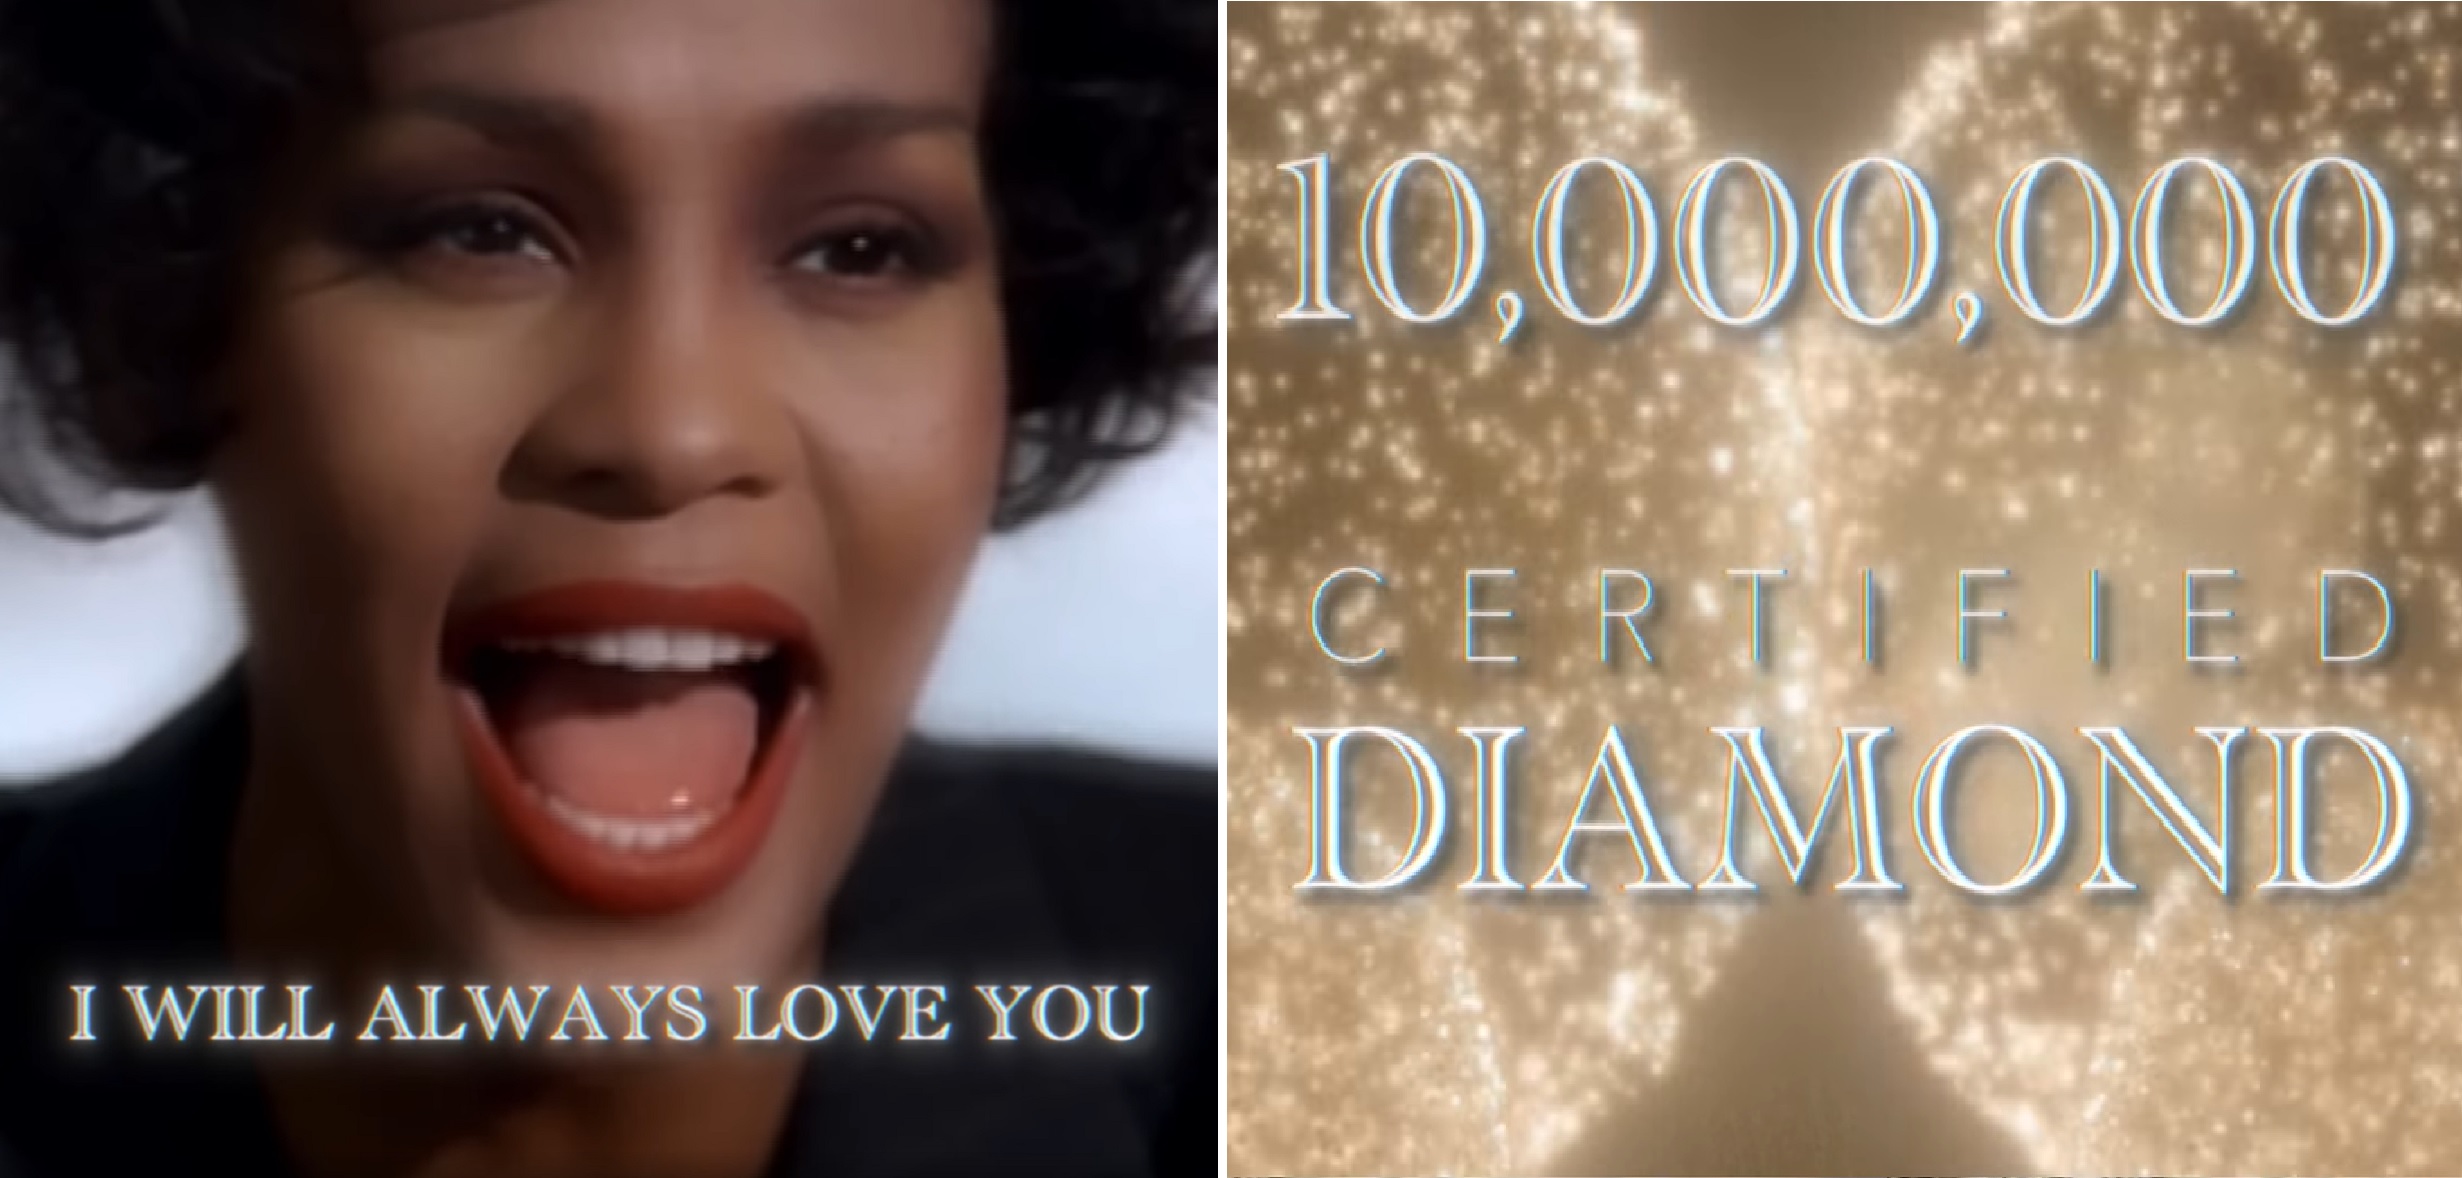 Whitney Houston's 'I Will Always Love You' tops 1 billion views on